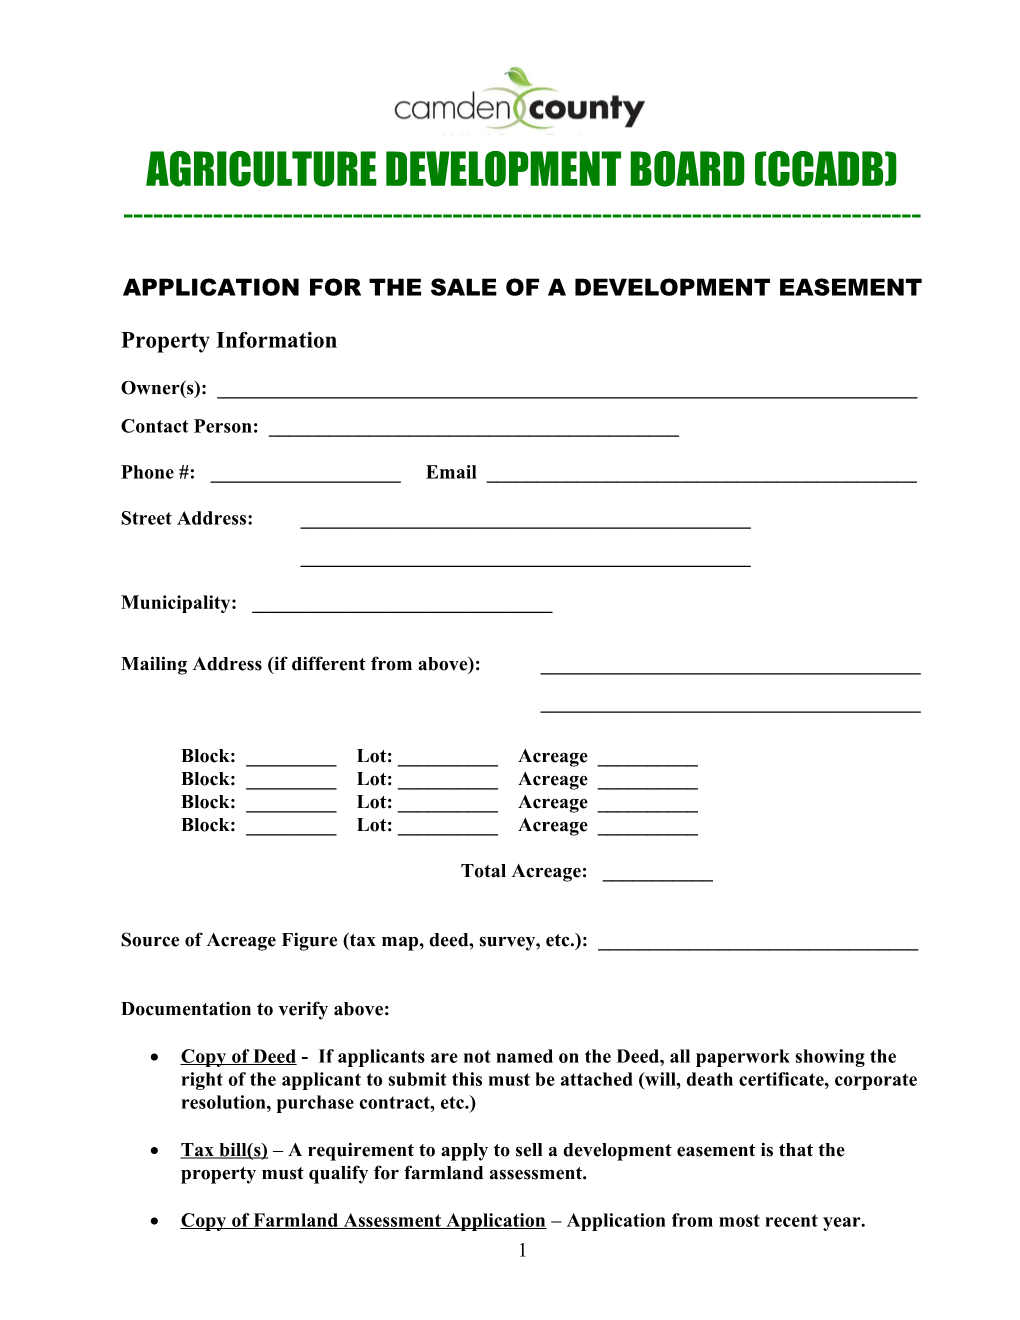 Camden County Agriculture Development Board